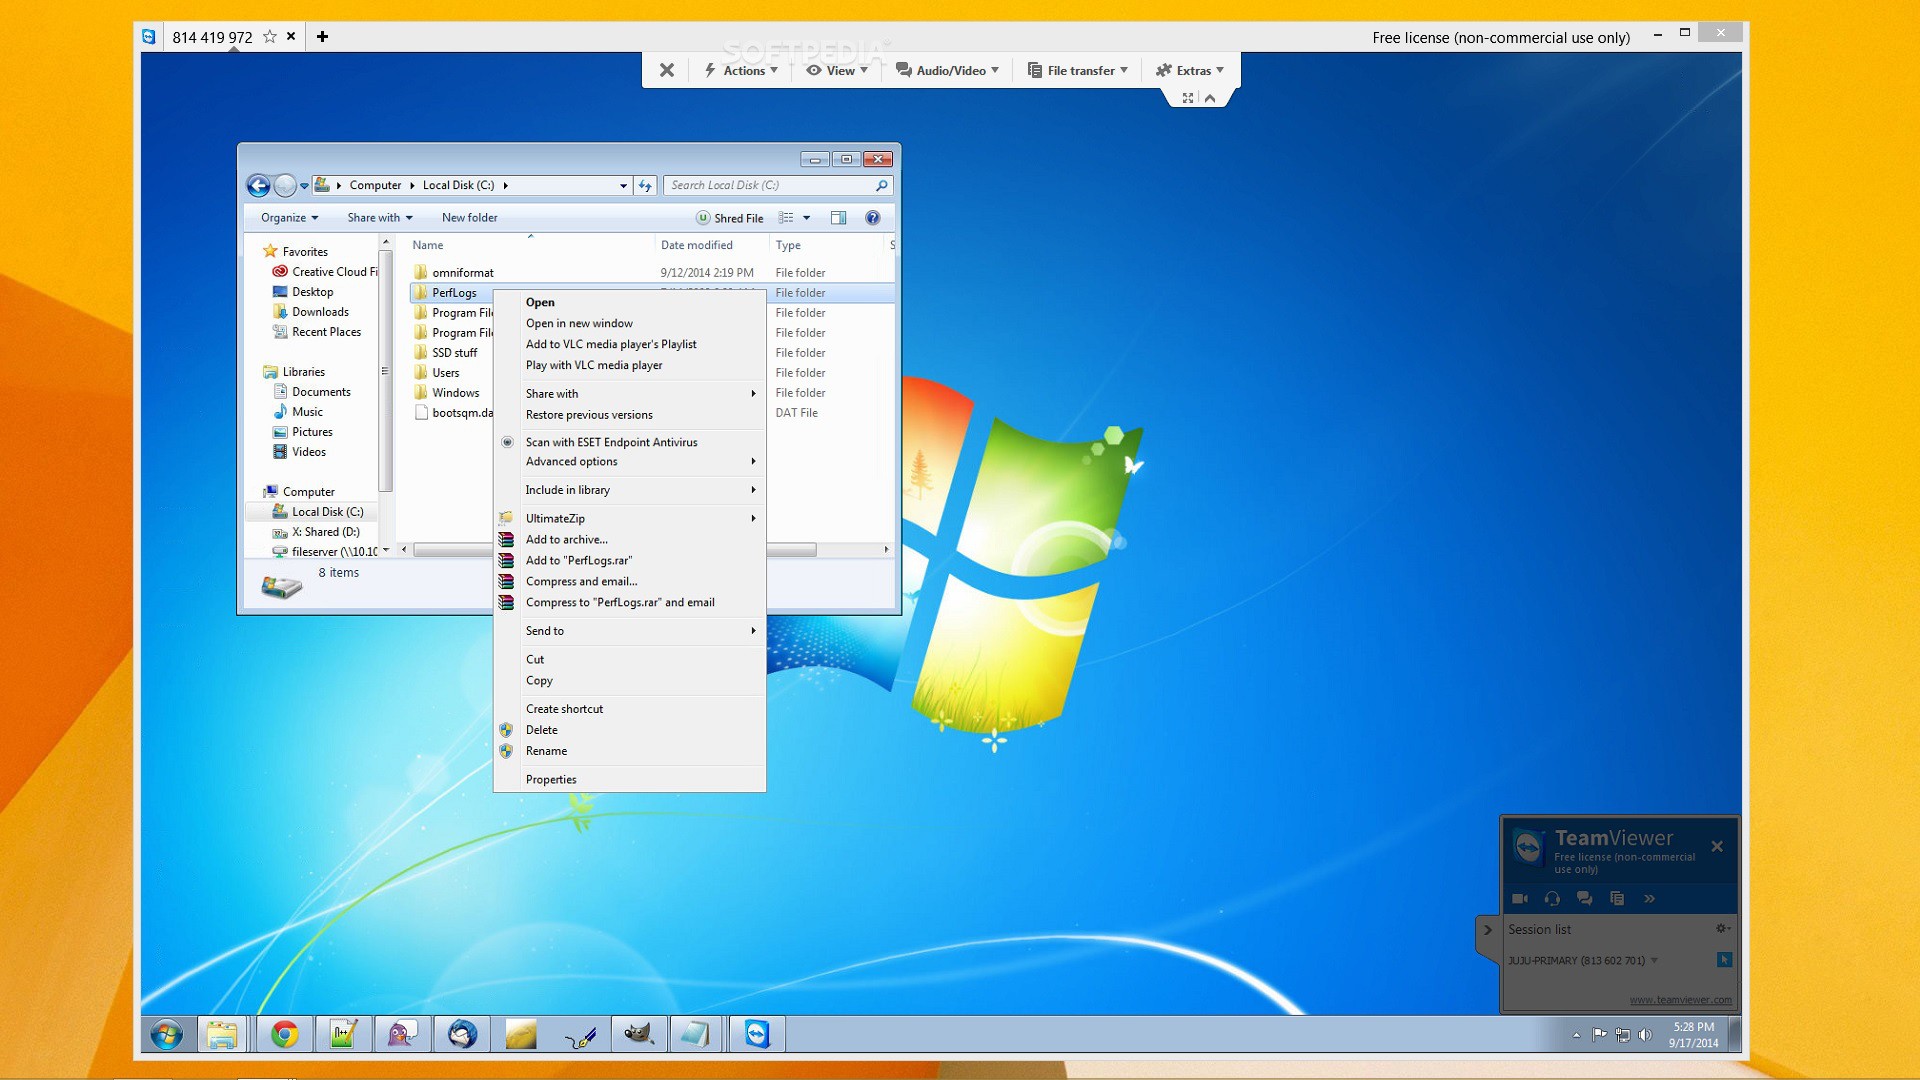 teamviewer 9 free download for windows xp 32 bit